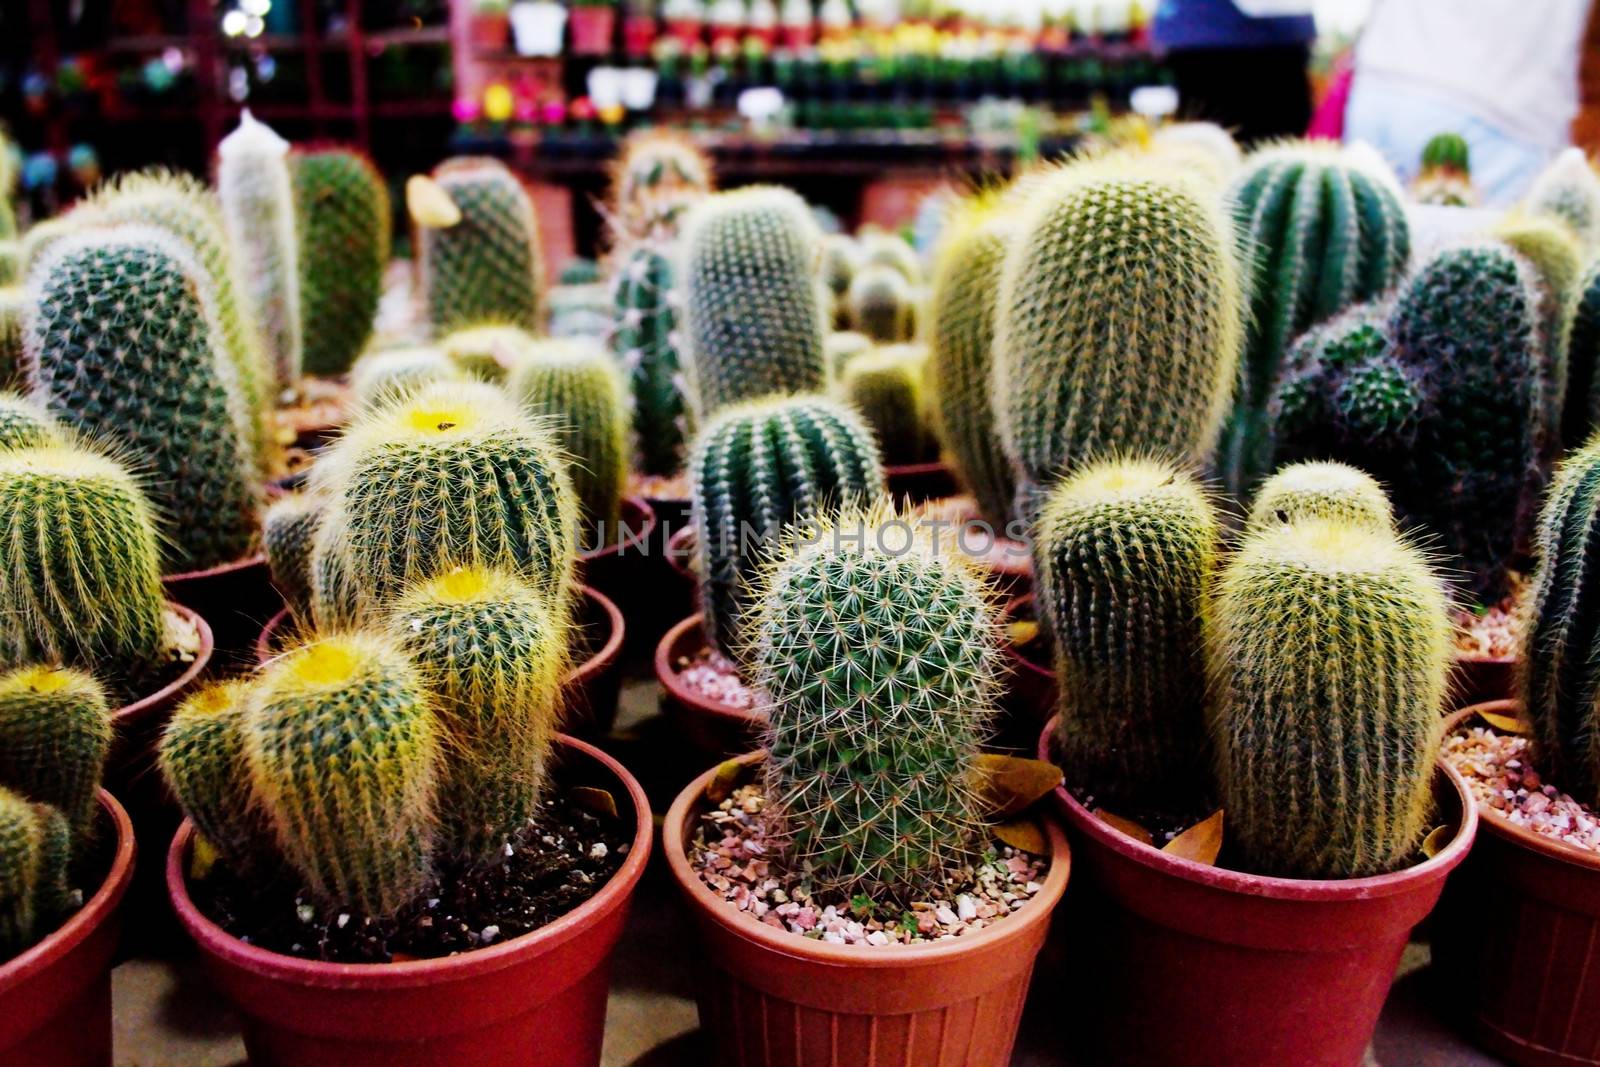 Cactus in pot by apichart